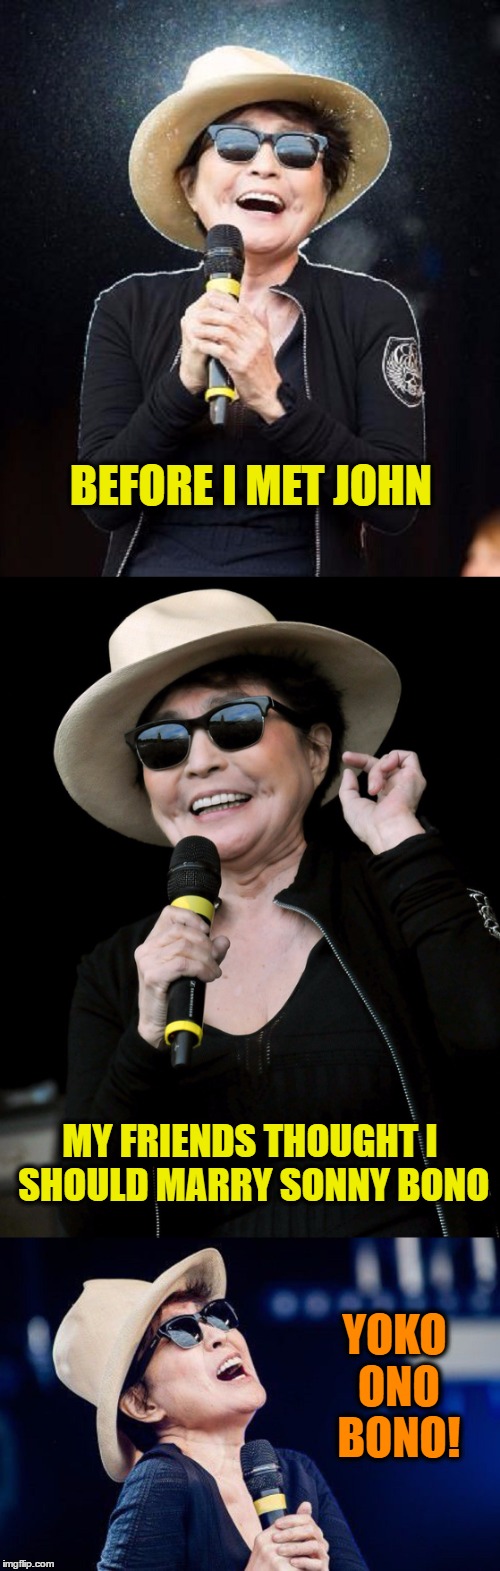 Yoko Ono Bono | BEFORE I MET JOHN; MY FRIENDS THOUGHT I SHOULD MARRY SONNY BONO; YOKO ONO BONO! | image tagged in yoko ono,memes,funny,wmp,sonny bono | made w/ Imgflip meme maker